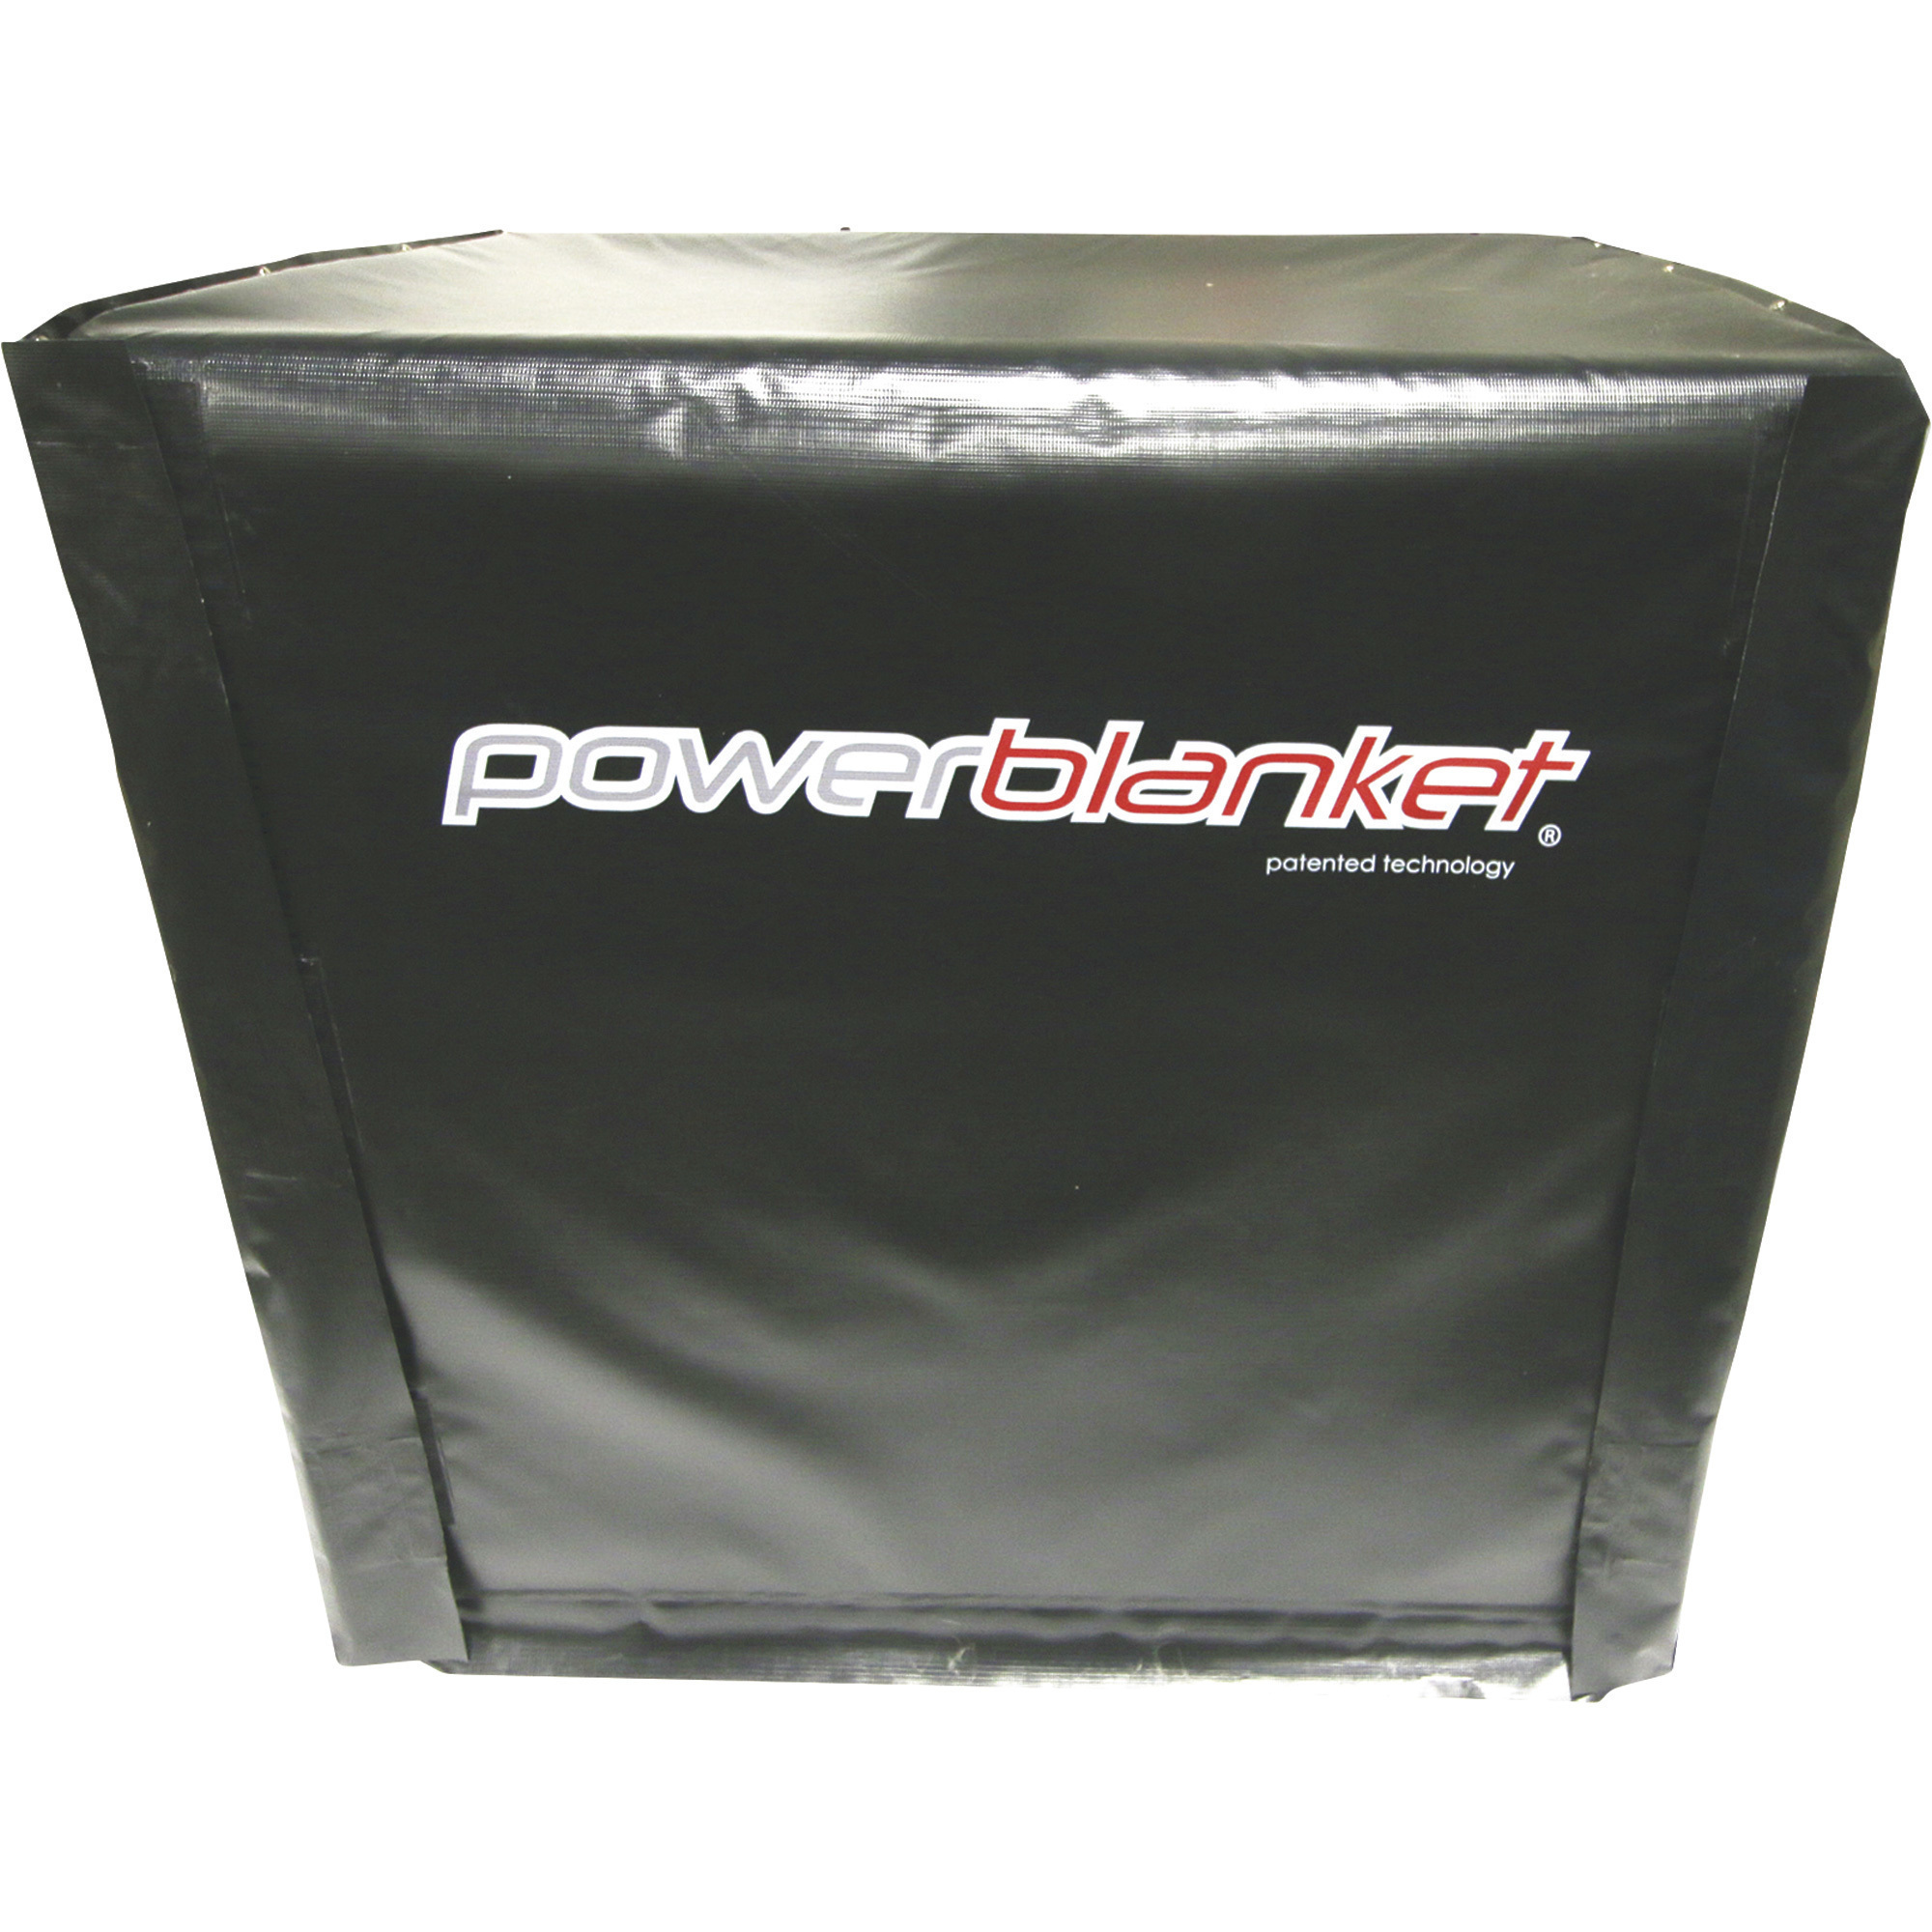 Powerblanket Hot Box Bulk Material Warmer, 48 Cu. Ft. Capacity, 1200 Watts, Model HB48-1200